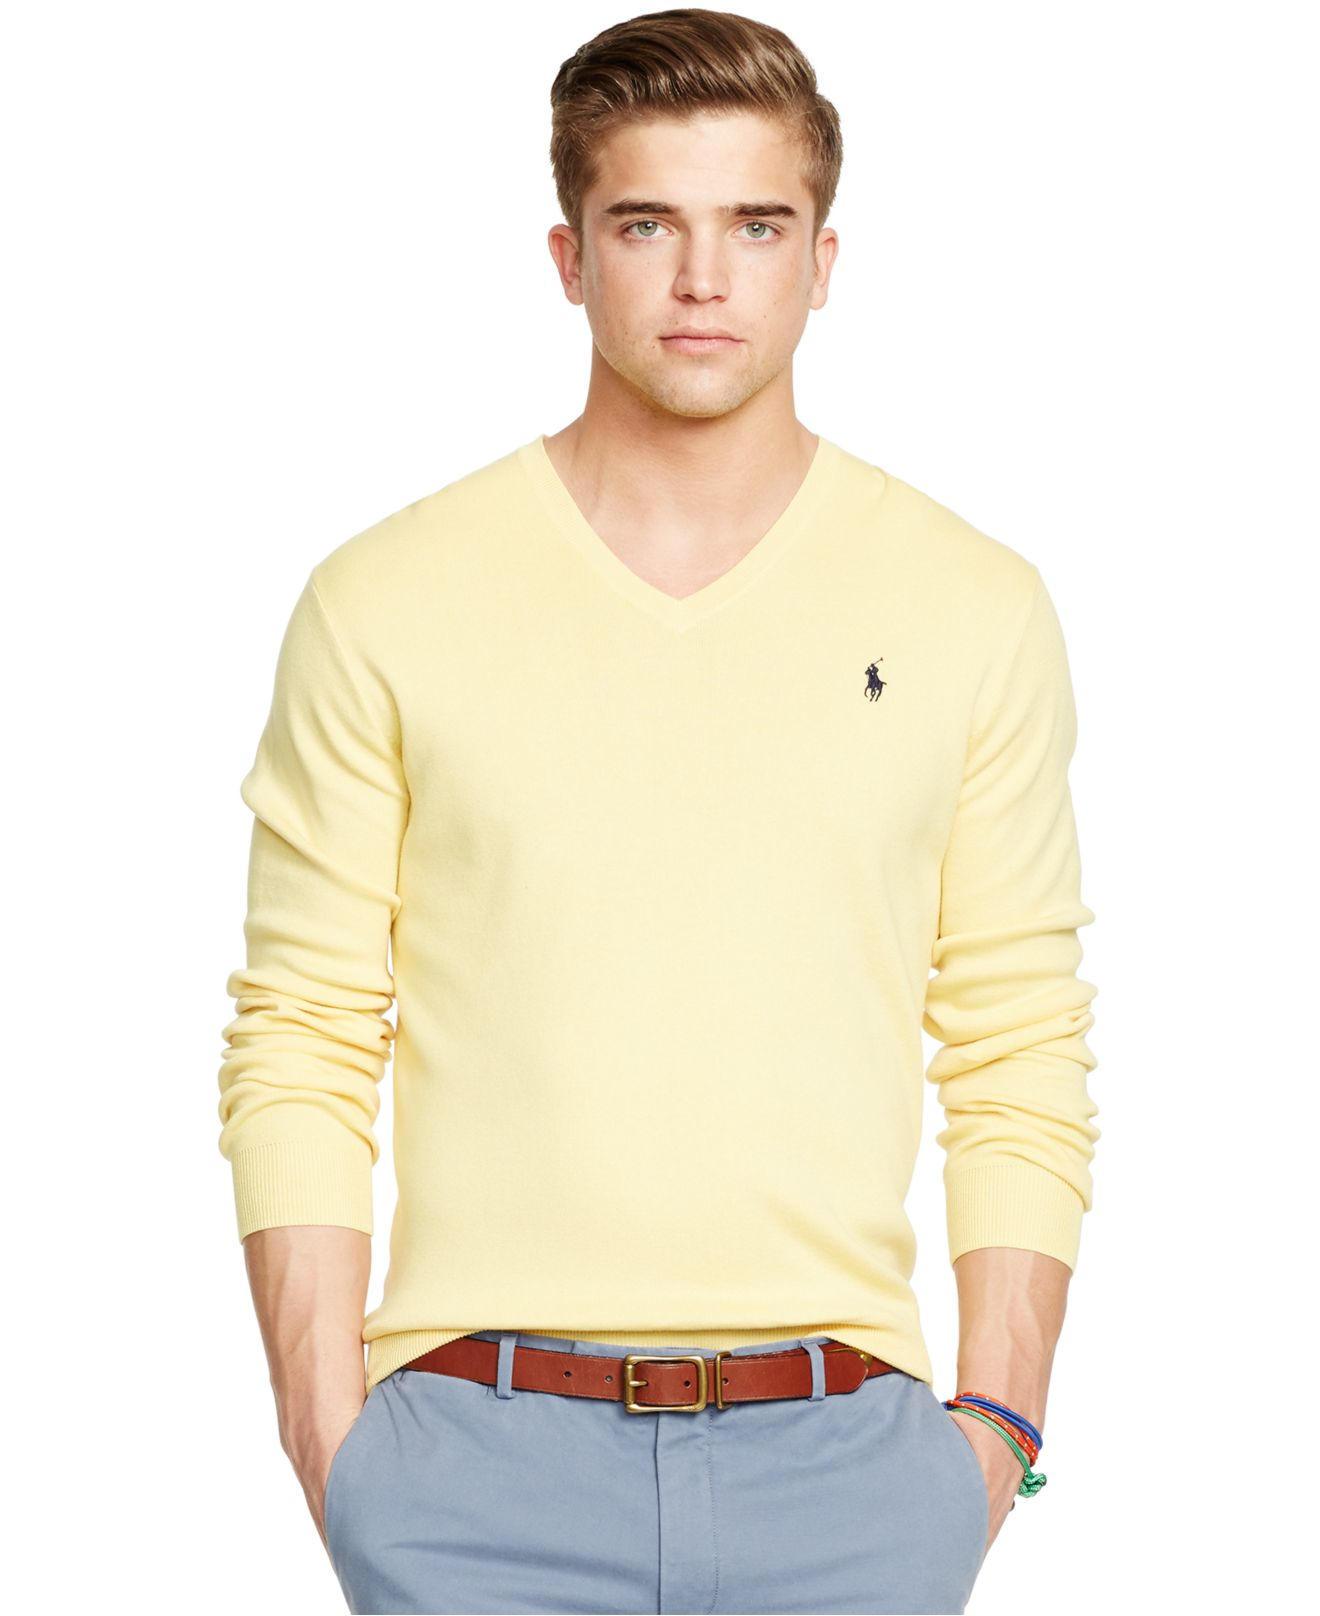 Lyst - Polo Ralph Lauren Pima V-neck Sweater in Yellow for Men